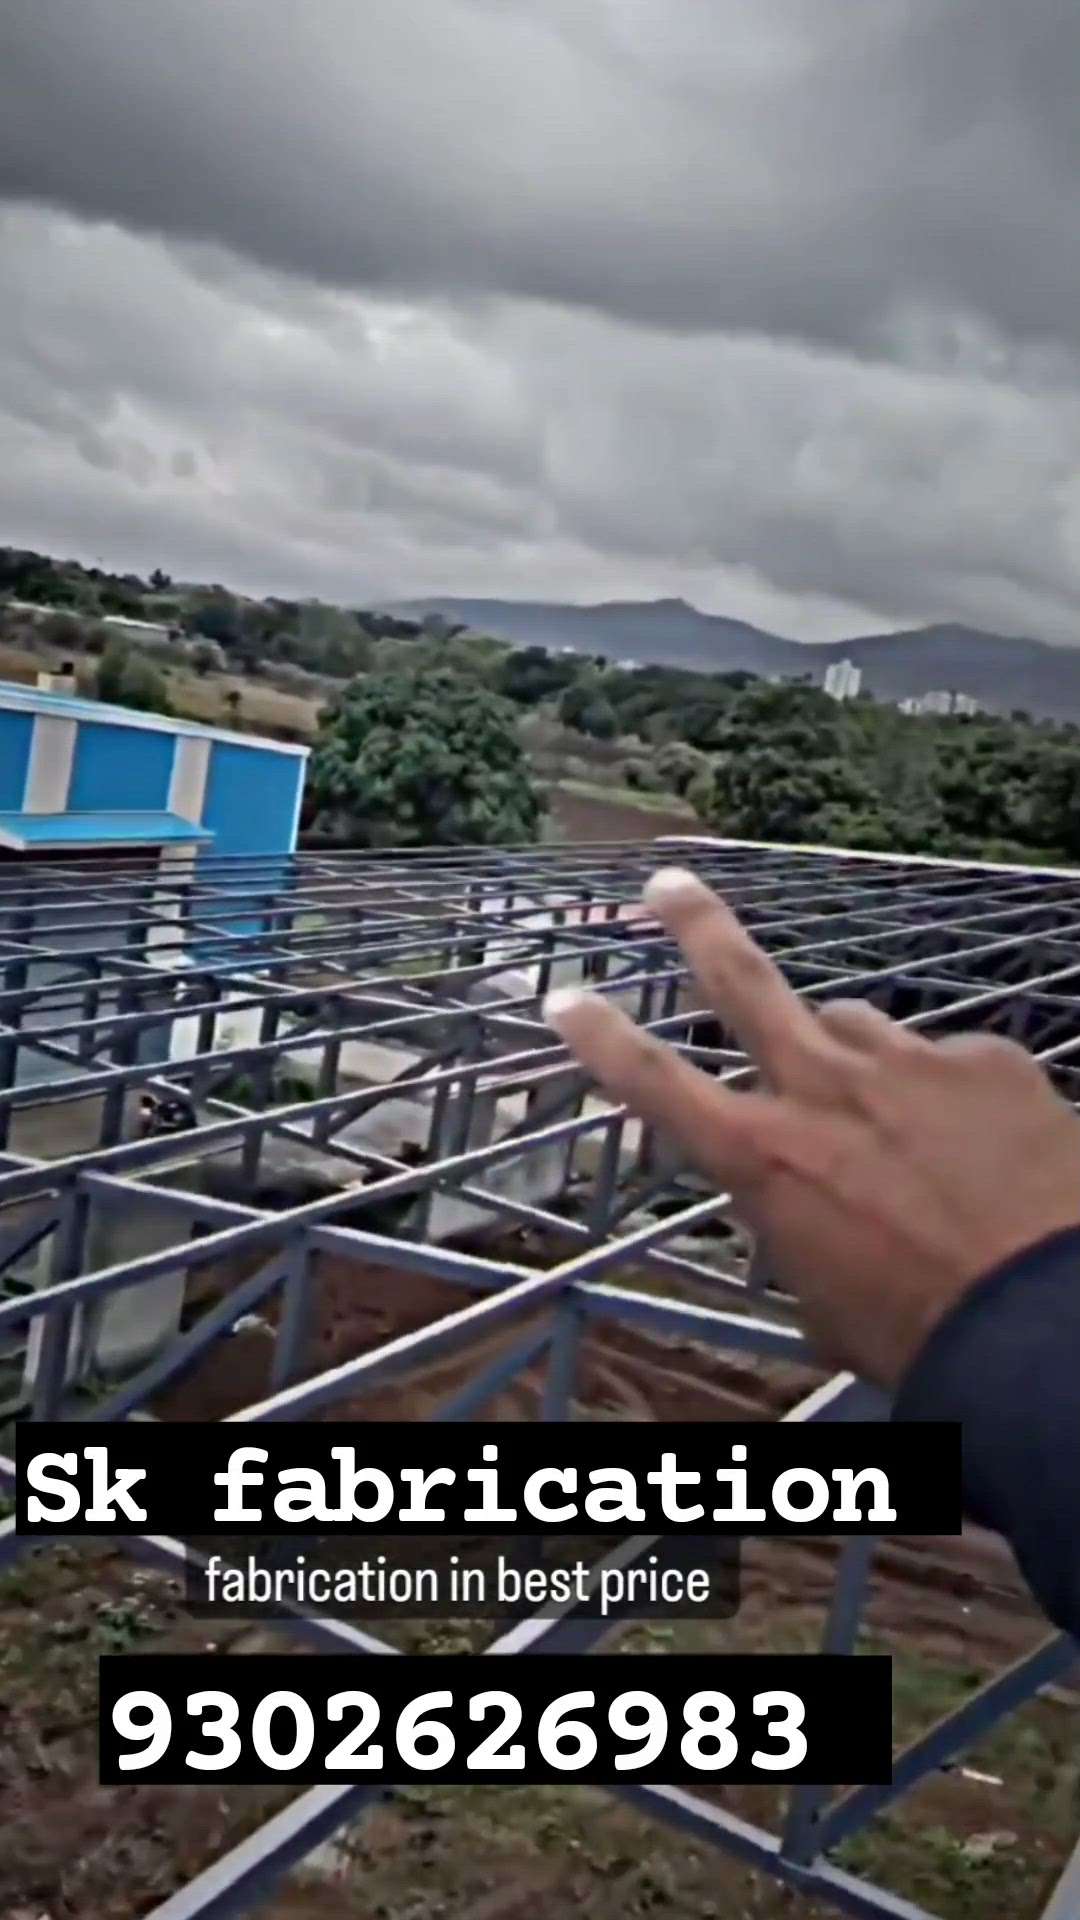 #33fabrication  #fabrication_work 
 #teenshad